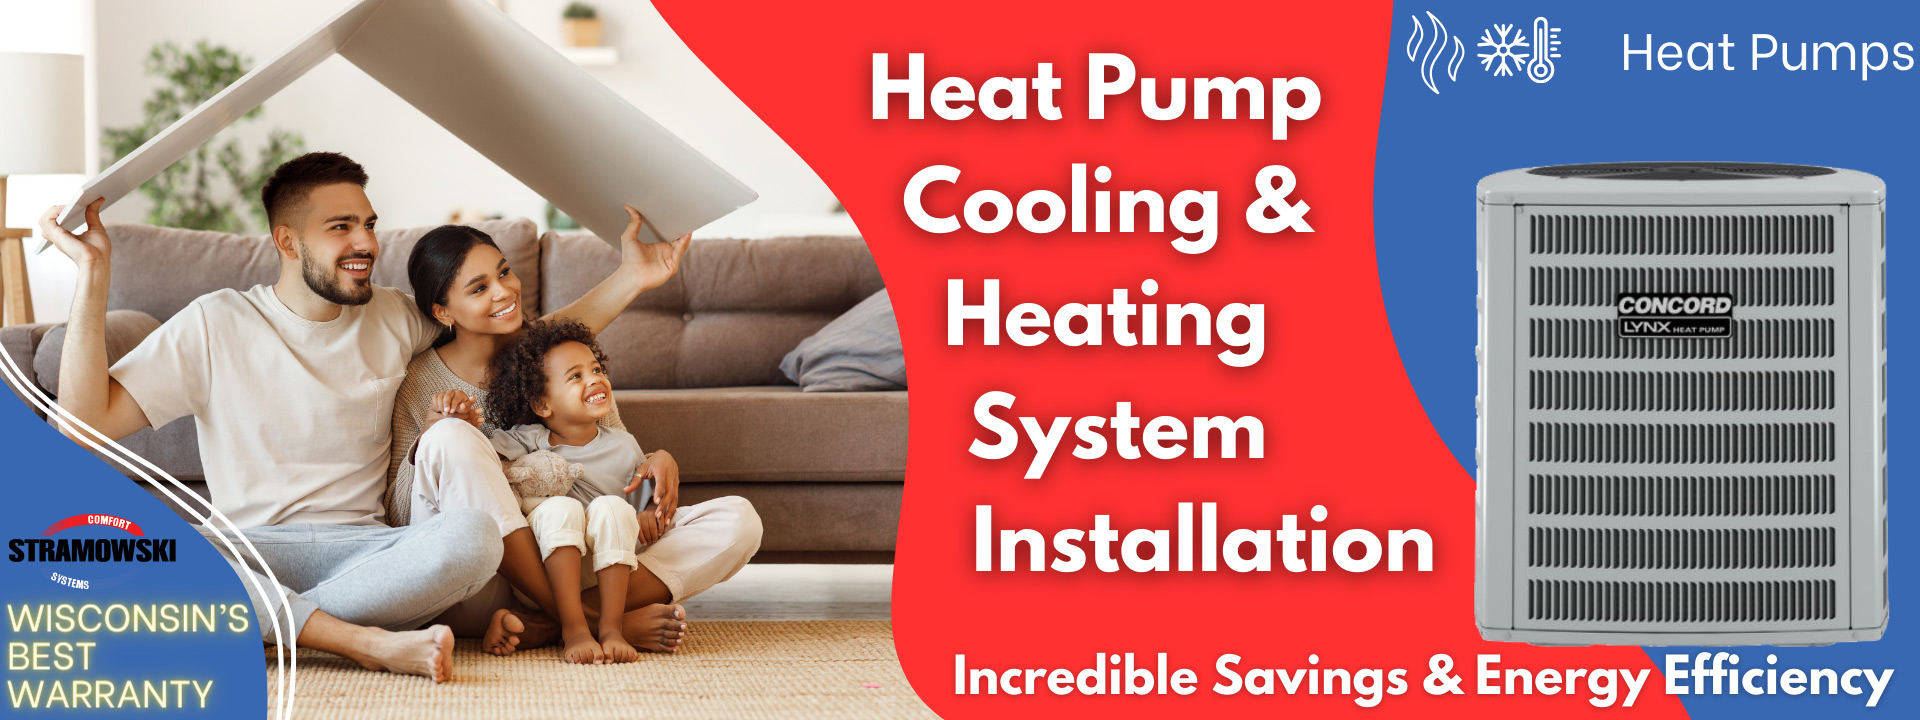 Heat Pumps Equipment Install Estimate